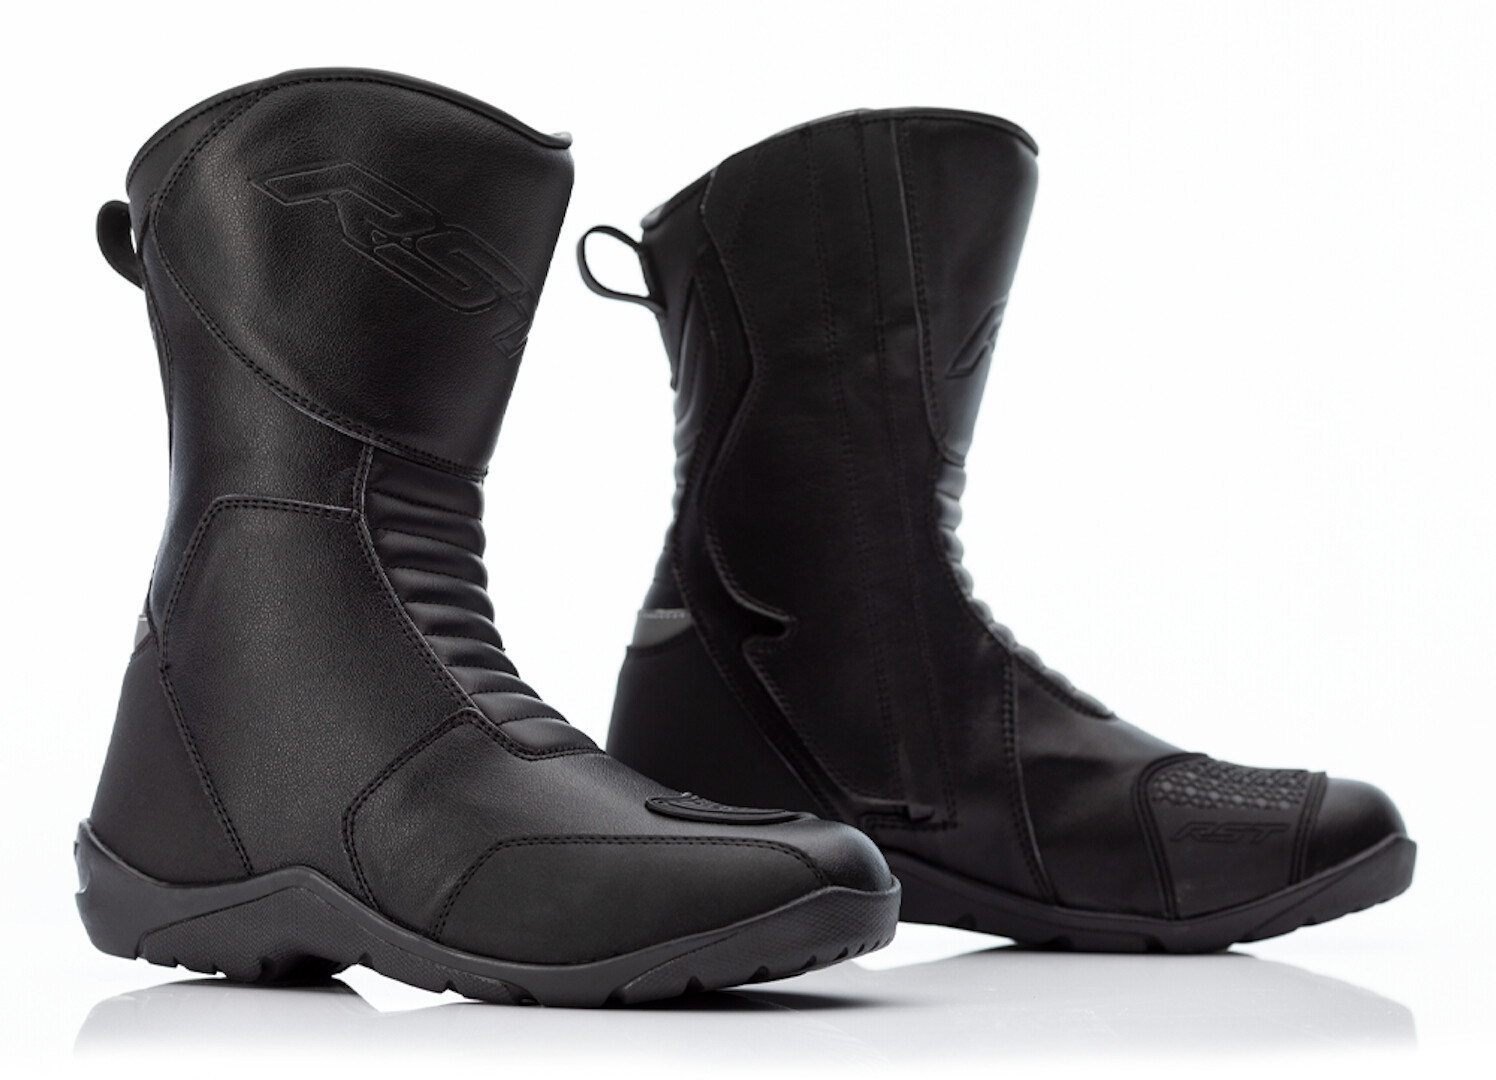 RST Axiom WP Ladies Motorcycle Boots, black, Size 37 for Women, black, Size 37 for Women